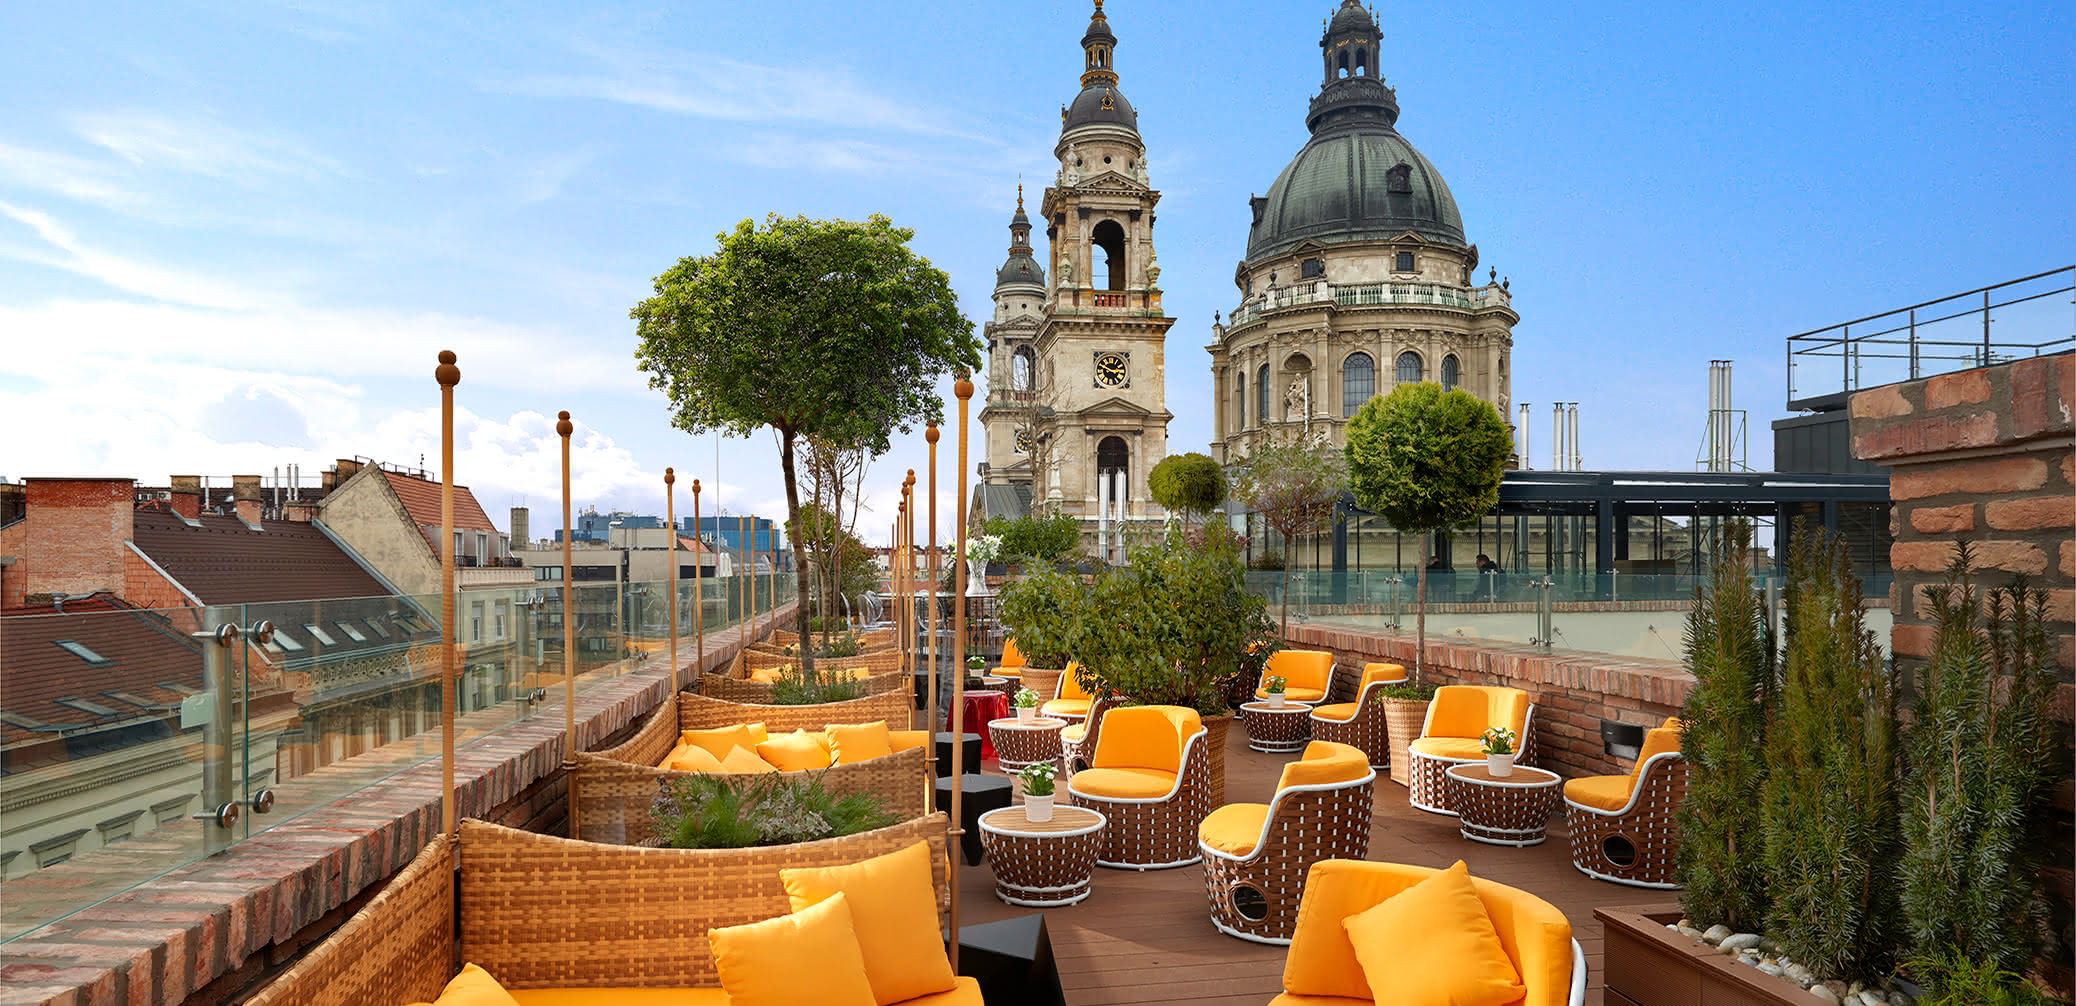 Bid On 2 Nights At The Stunning Aria Hotel Budapest, Hungary